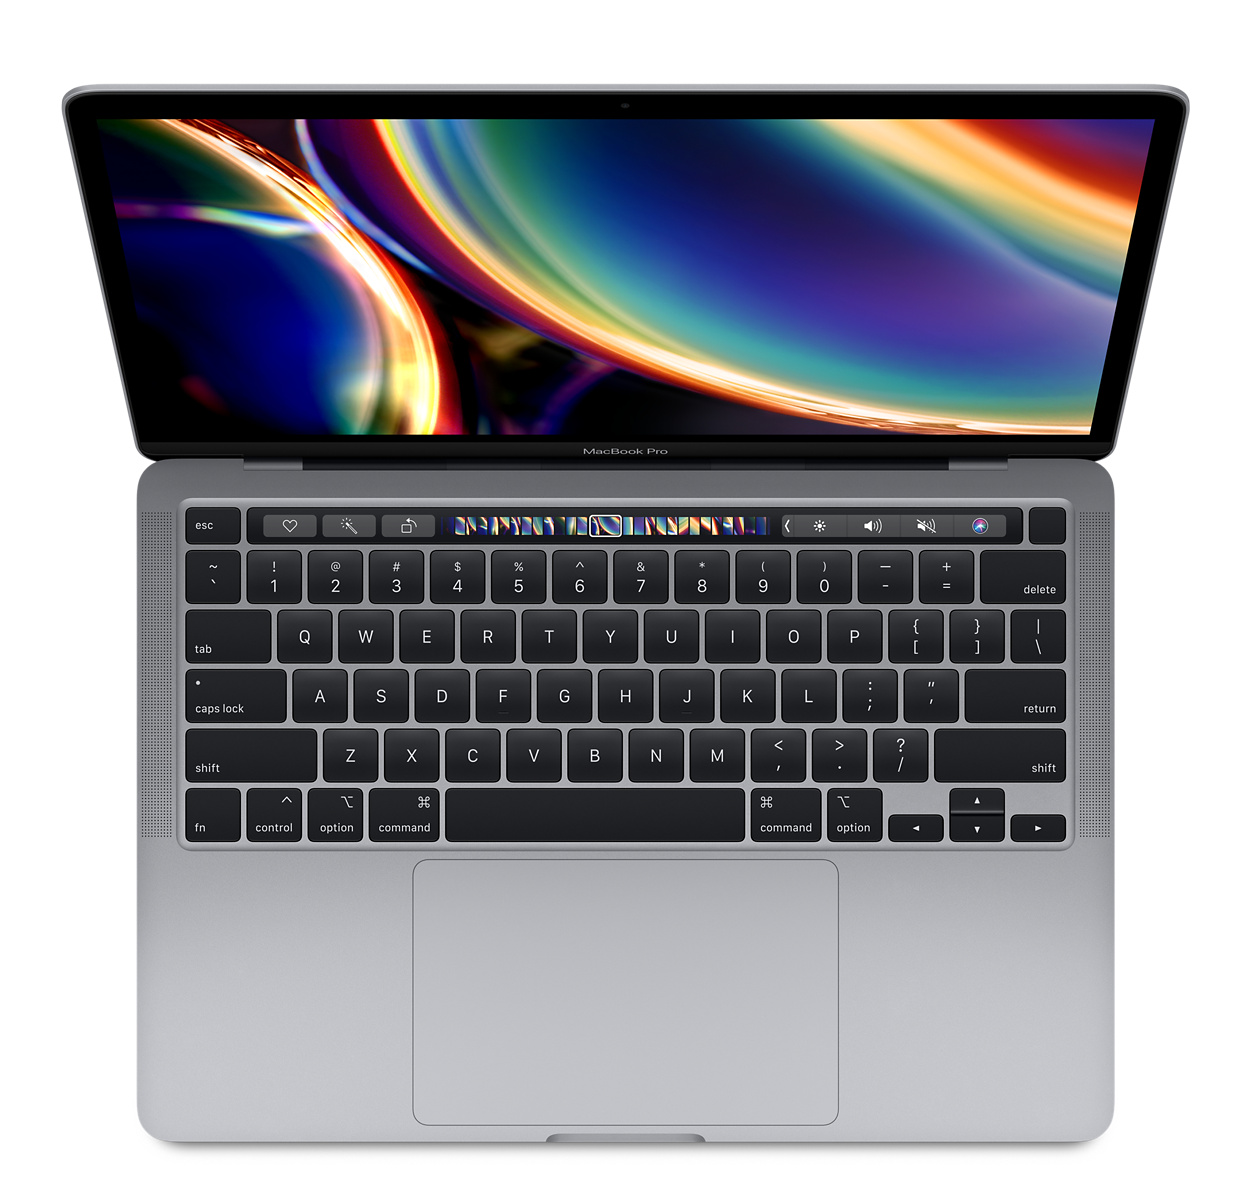 Apple Macbook Pro Buying Guide